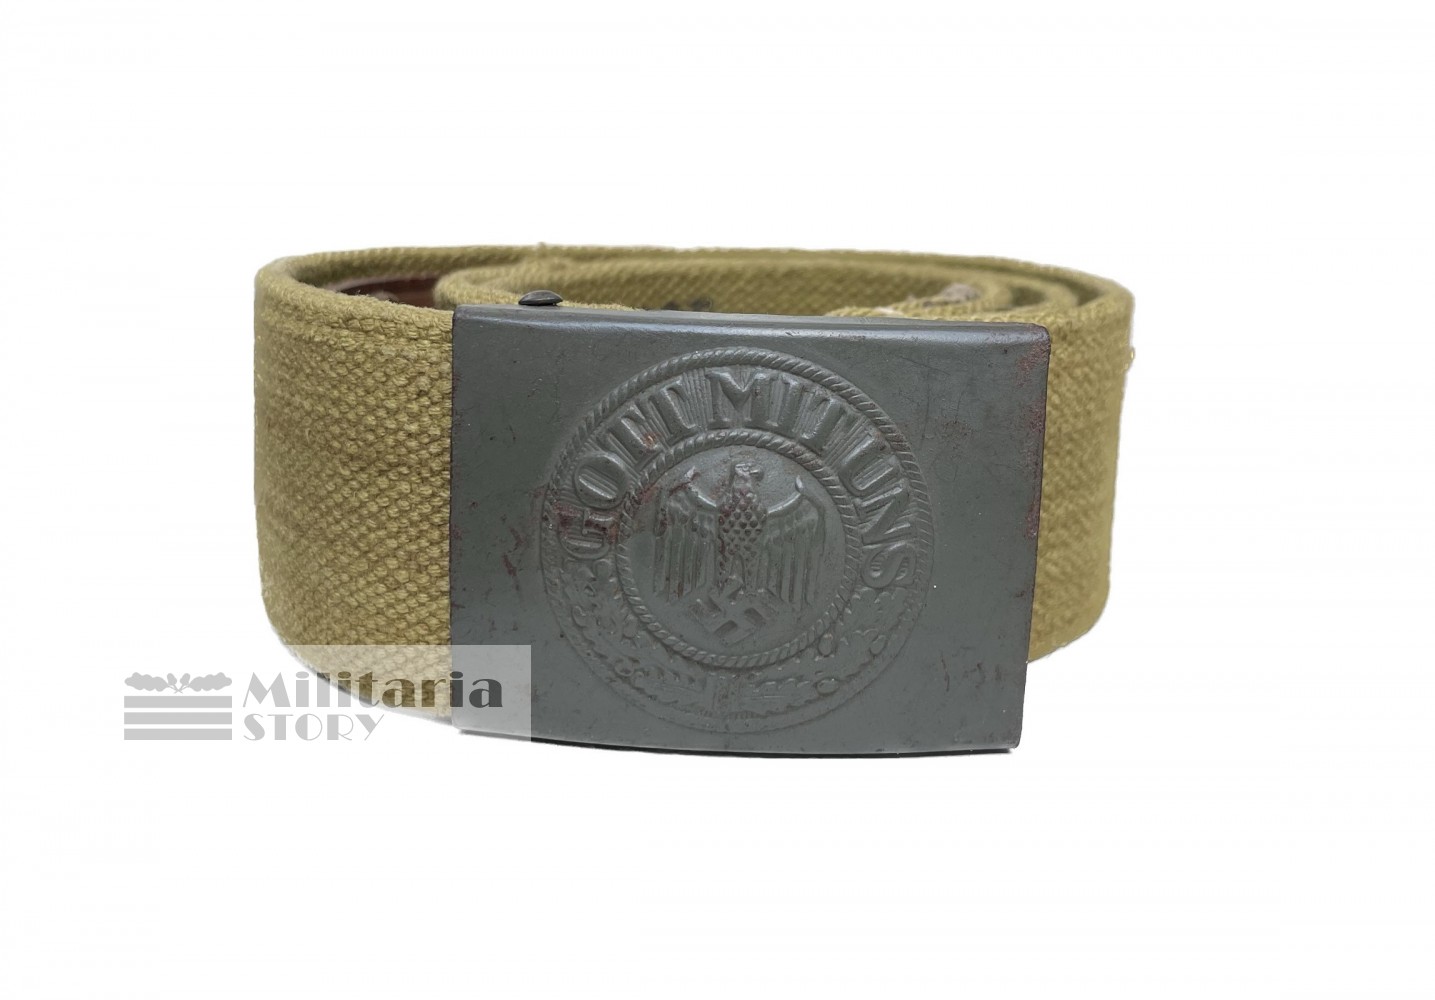 DAK belt and buckle - DAK belt and buckle: German Equipment